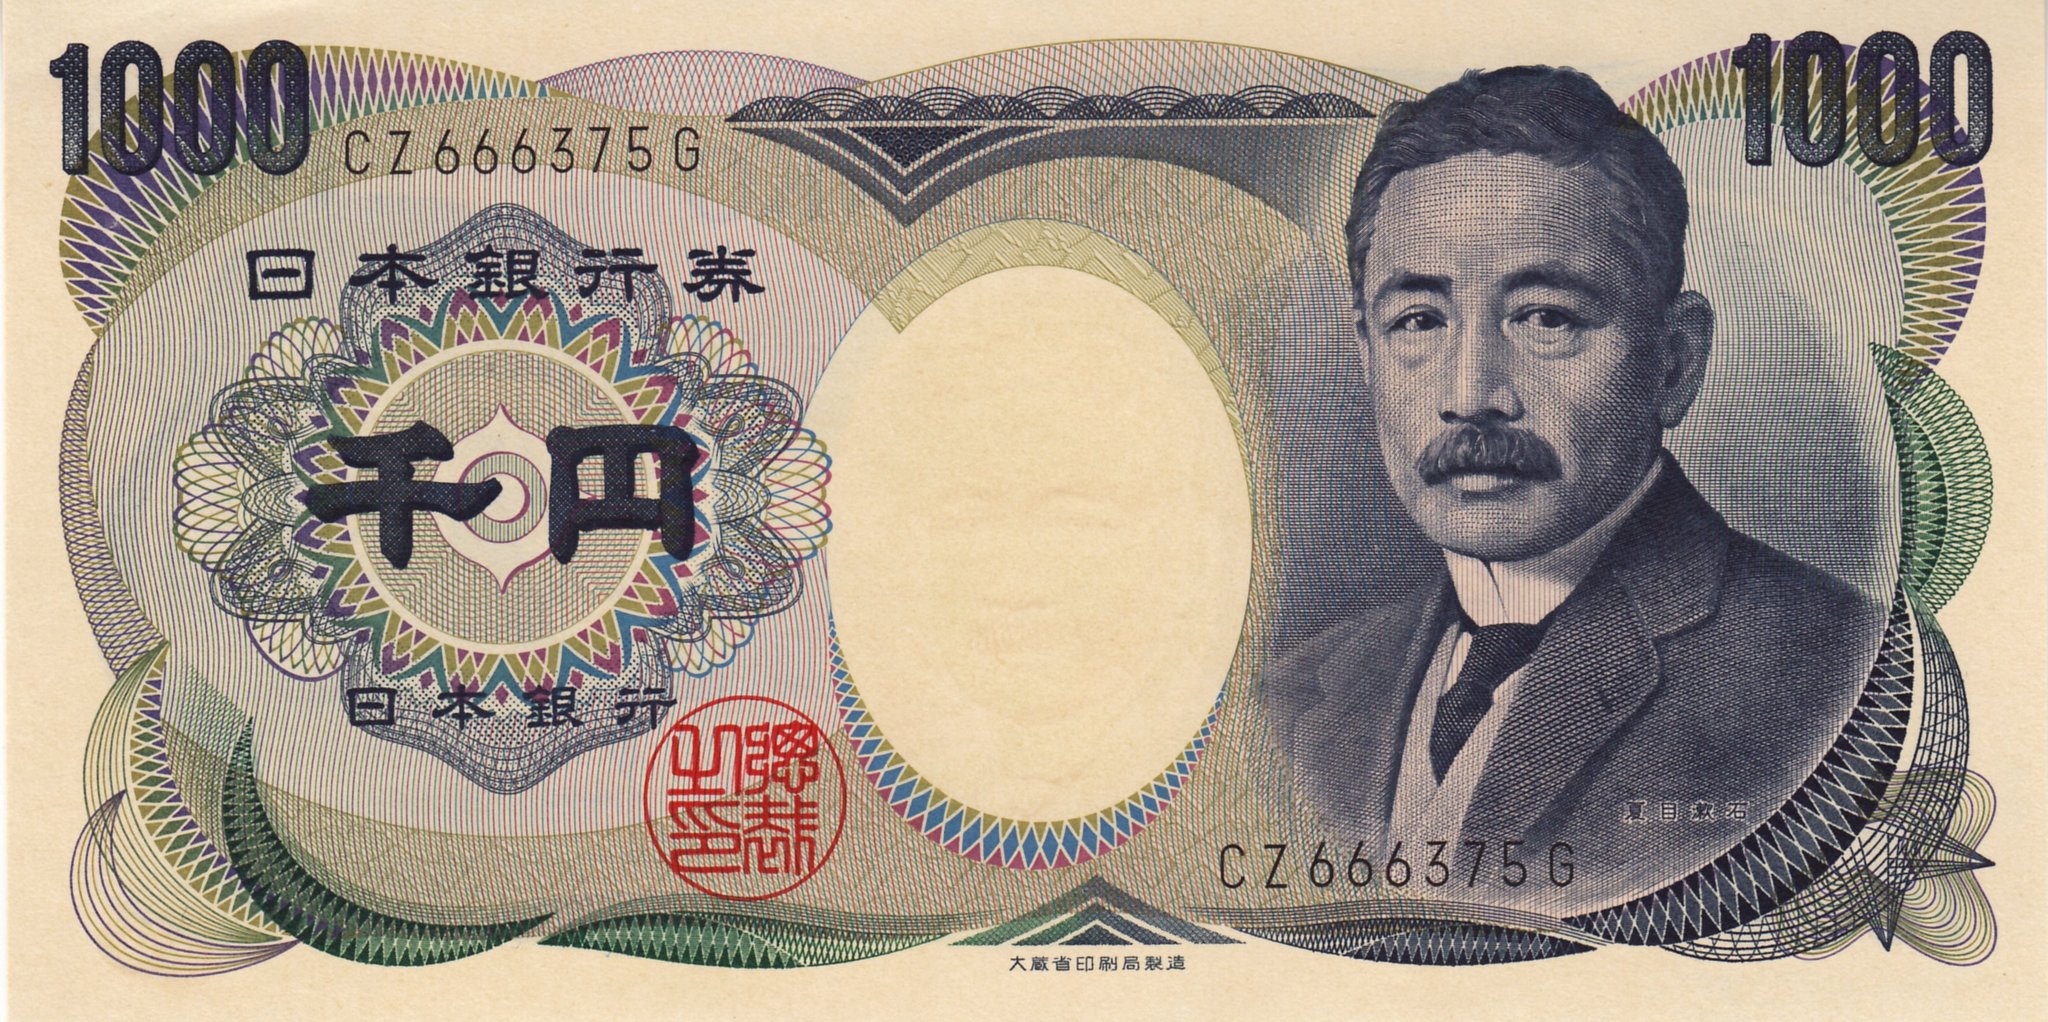 Forex Trading 101: the Basics - Japanese Yen banknote.